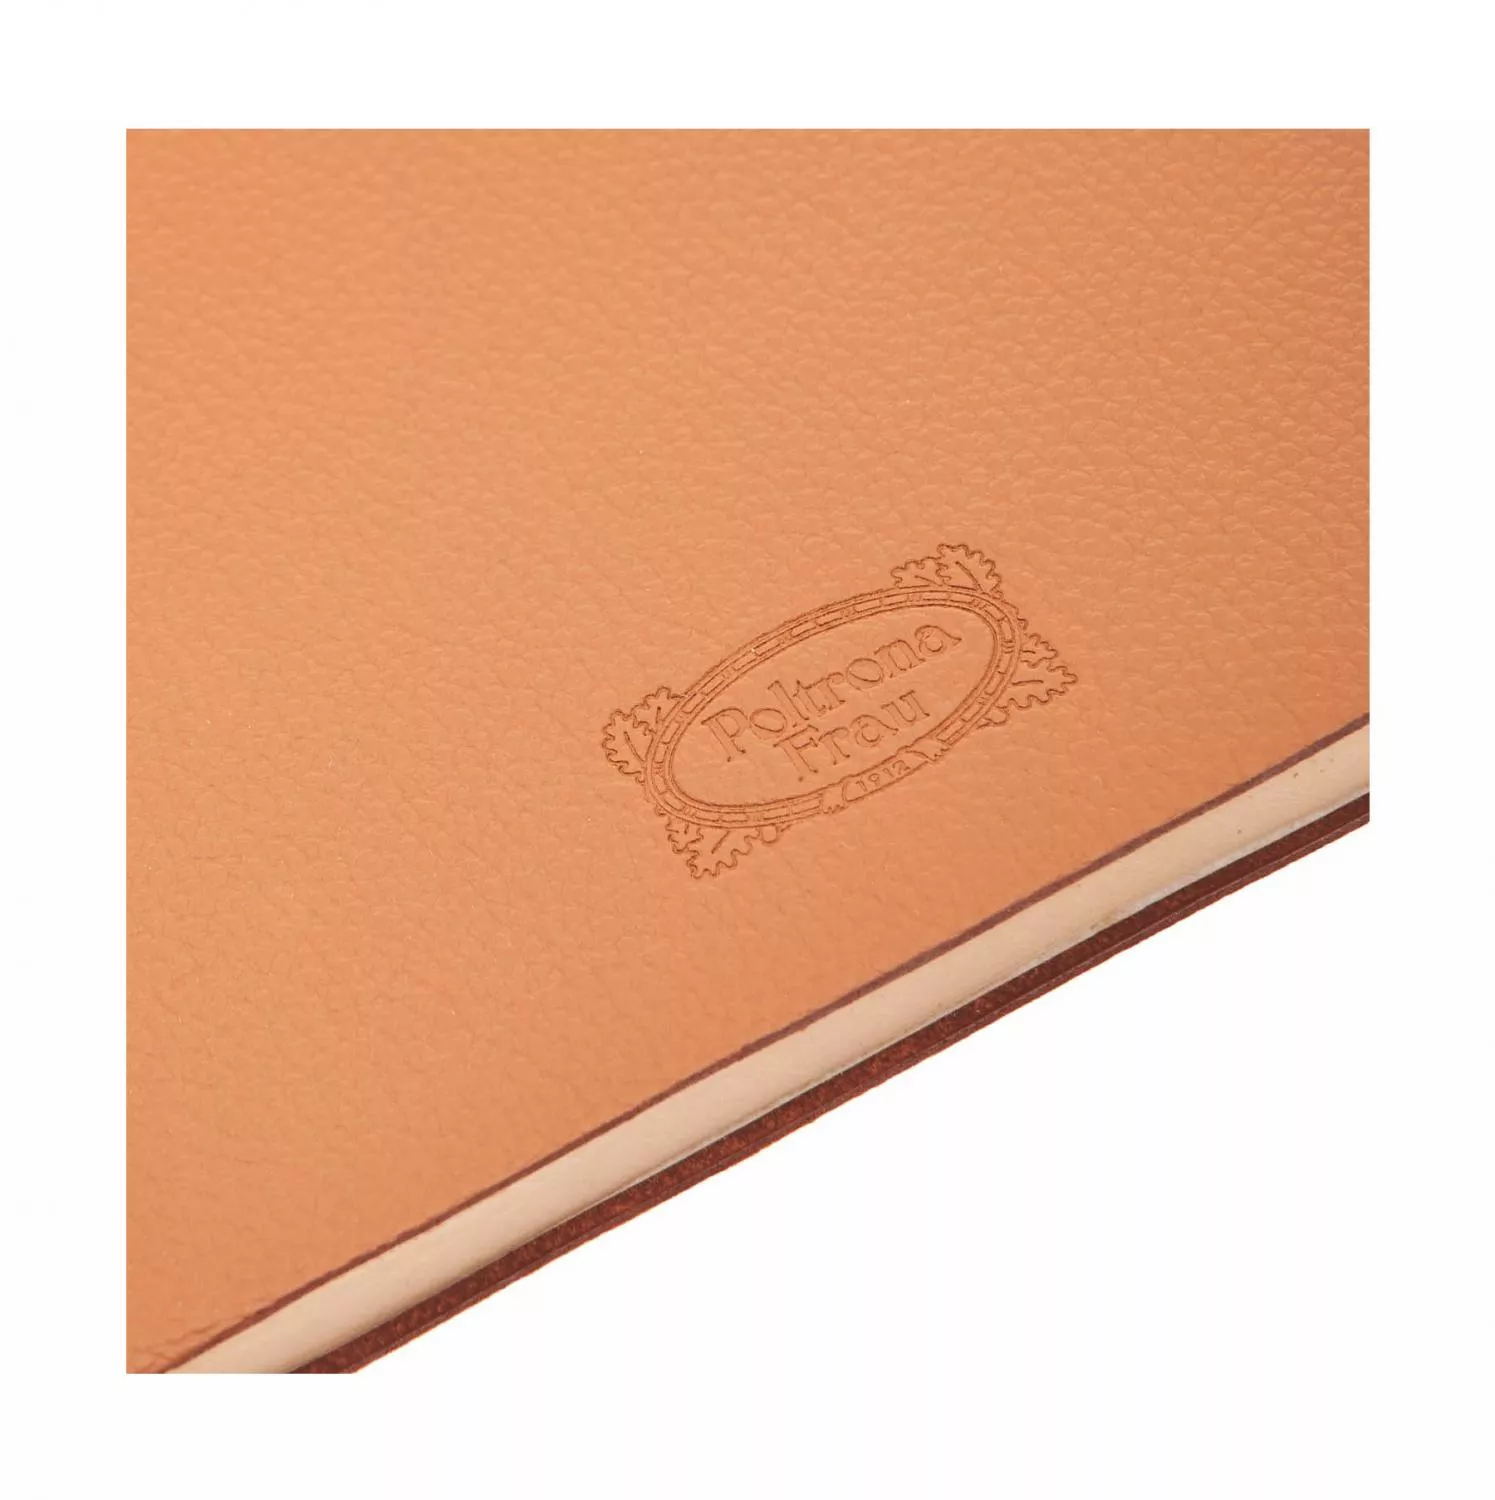 Notebook Pineider x Poltrona Frau 14,5x21cm